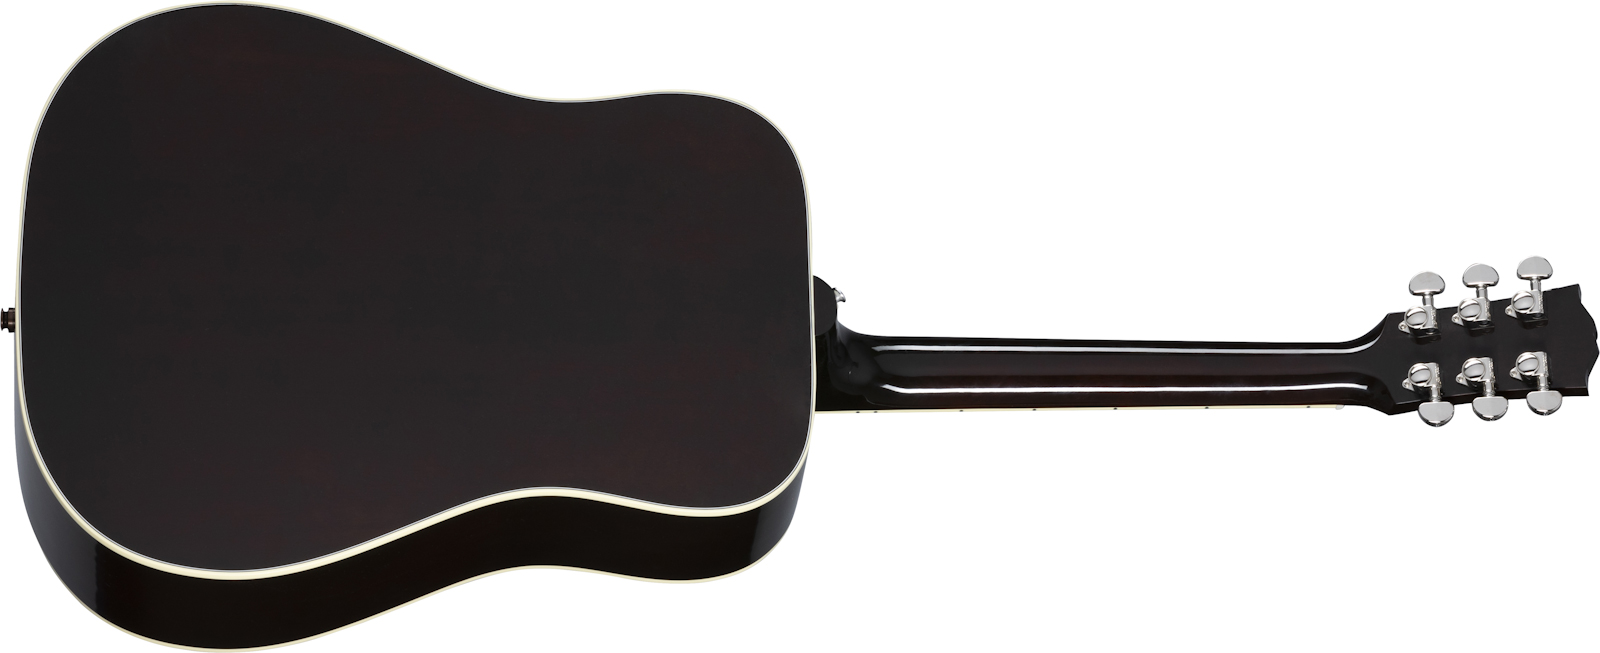 Gibson Hummingbird Standard Modern Dreadnought Epicea Acajou Rw - Vintage Sunburst - Elektroakustische Gitarre - Variation 1